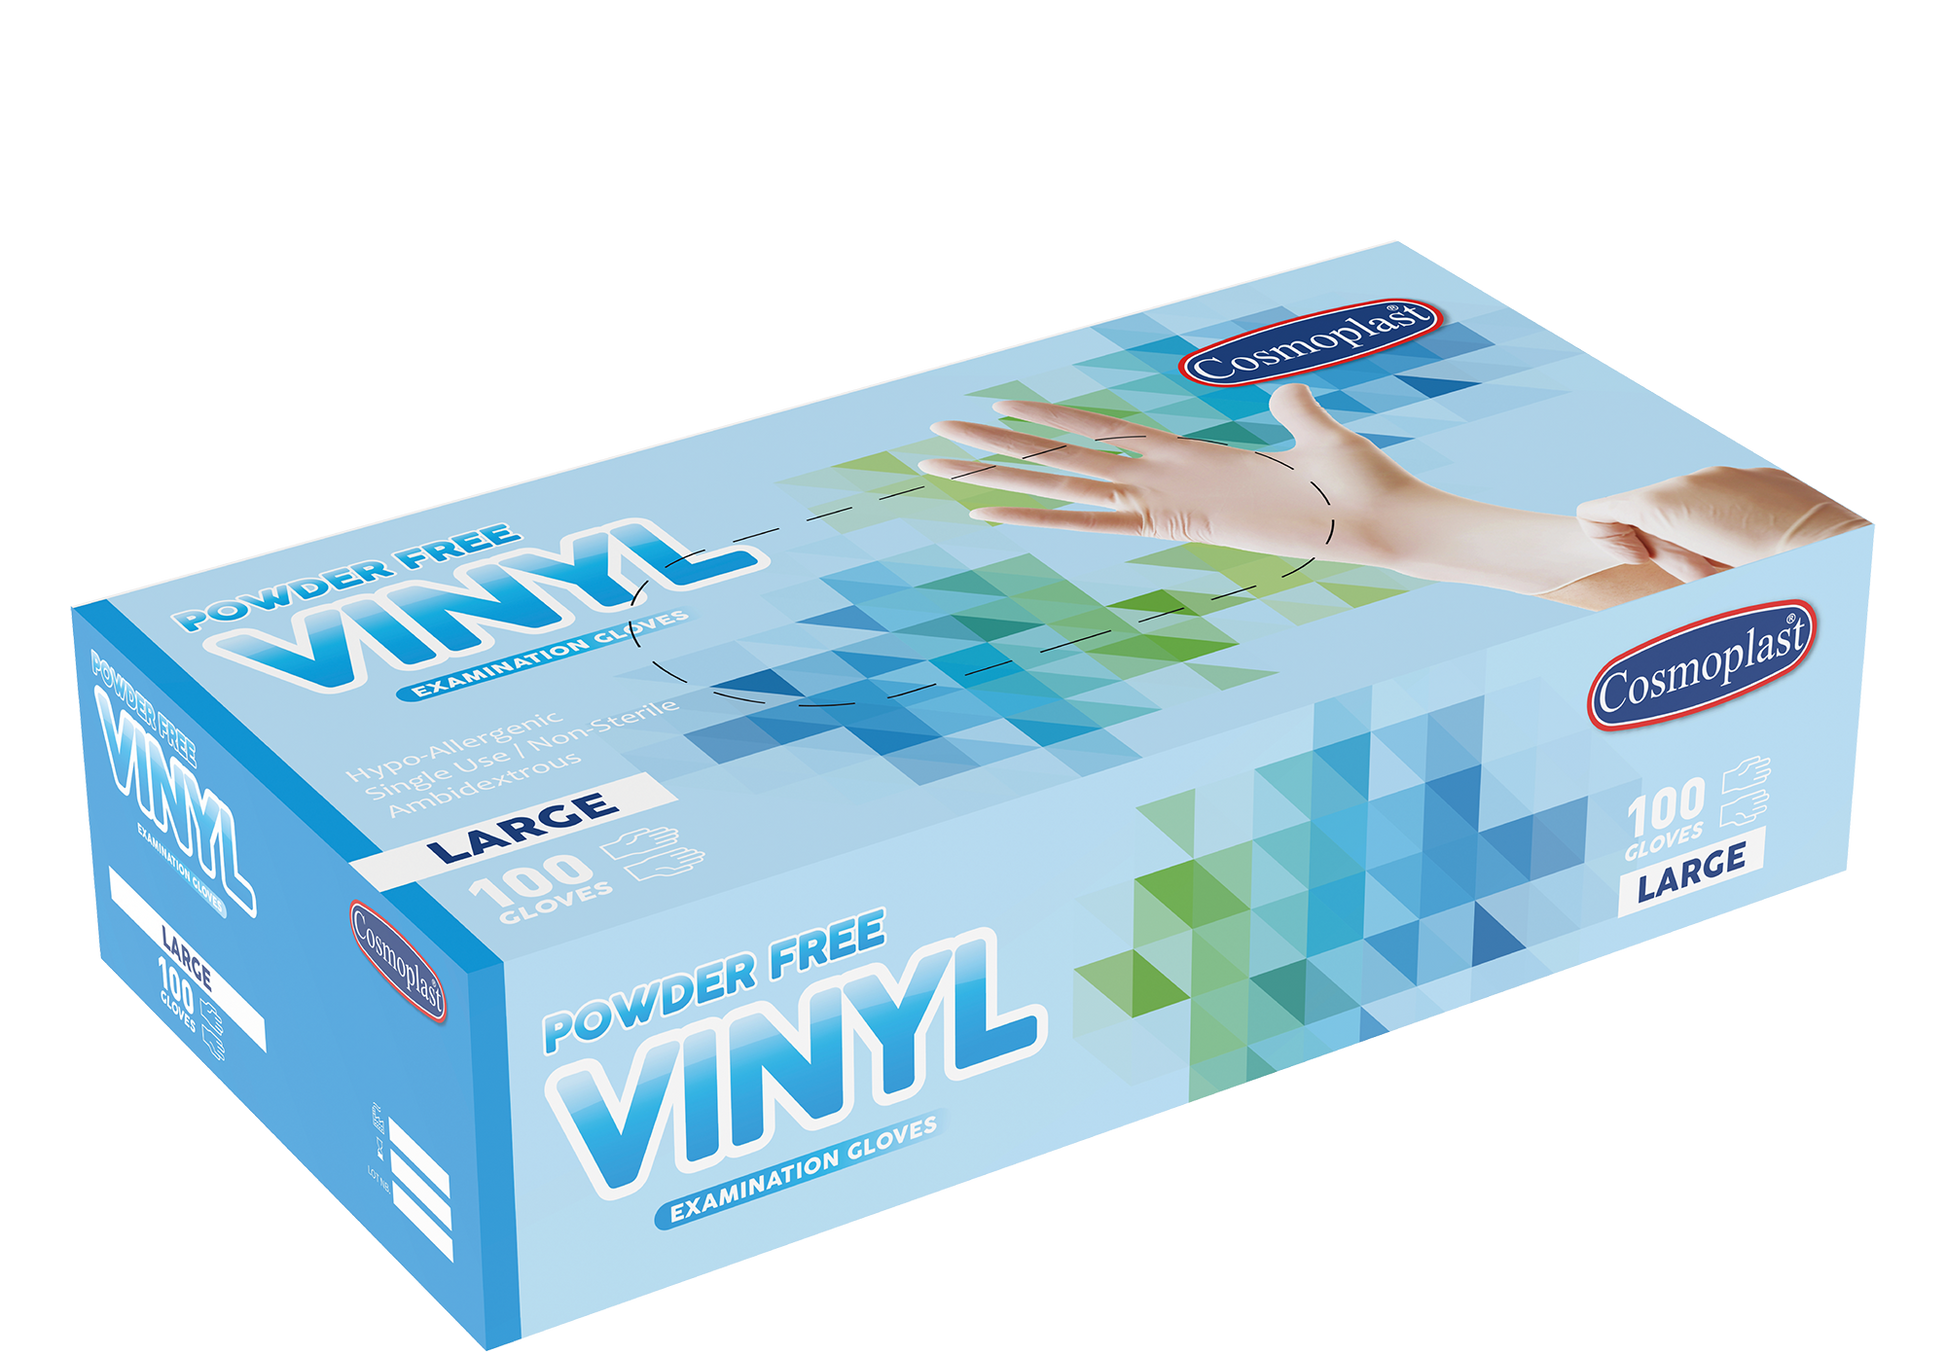 Cosmoplast Hygiene Clear Powder-free Vinyl Gloves Large 100 Pcs